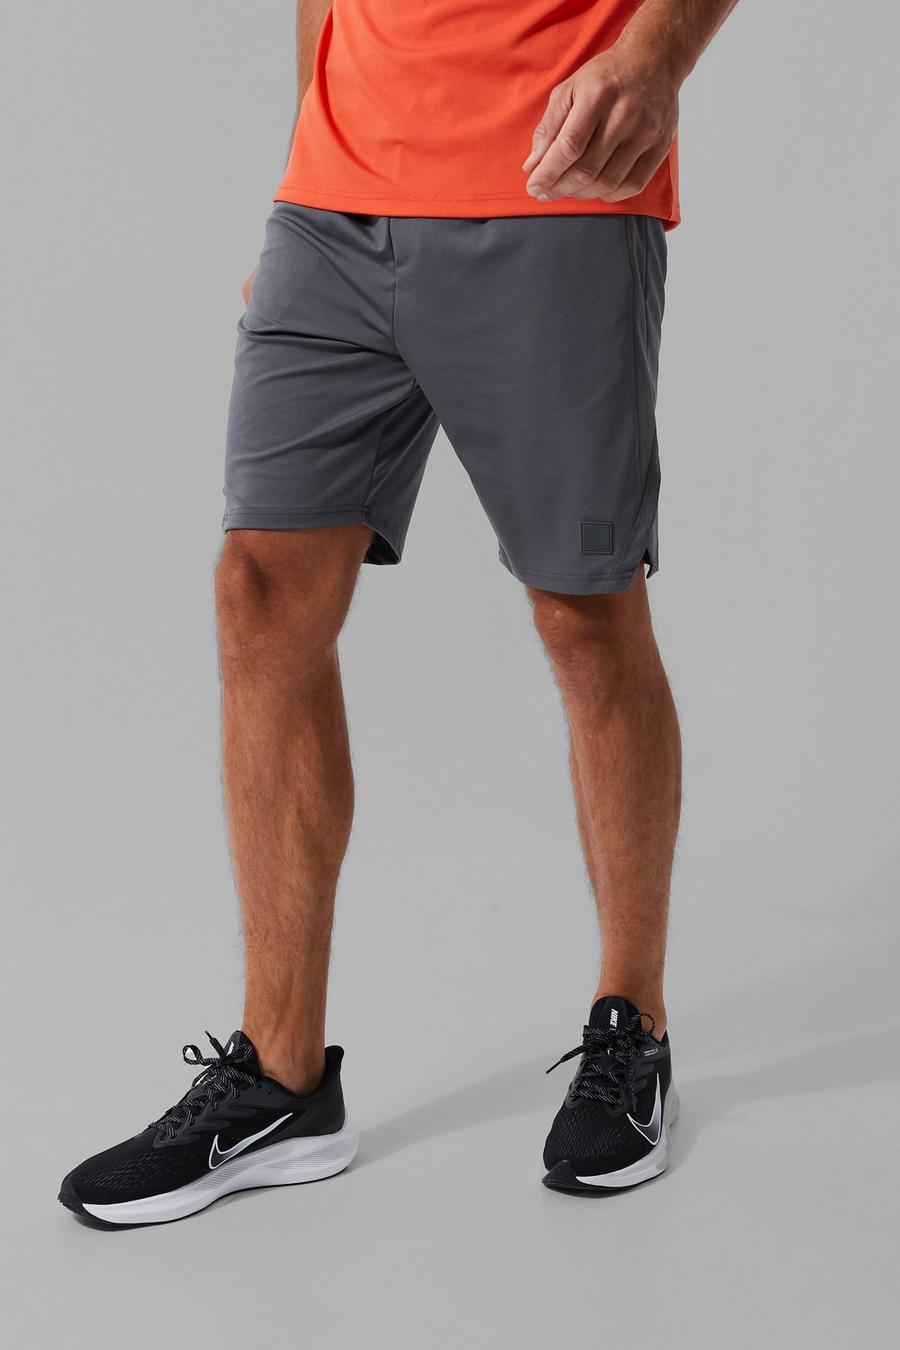 Pantaloncini Man Active Tall per alta performance con spacco sul fondo, Charcoal gris